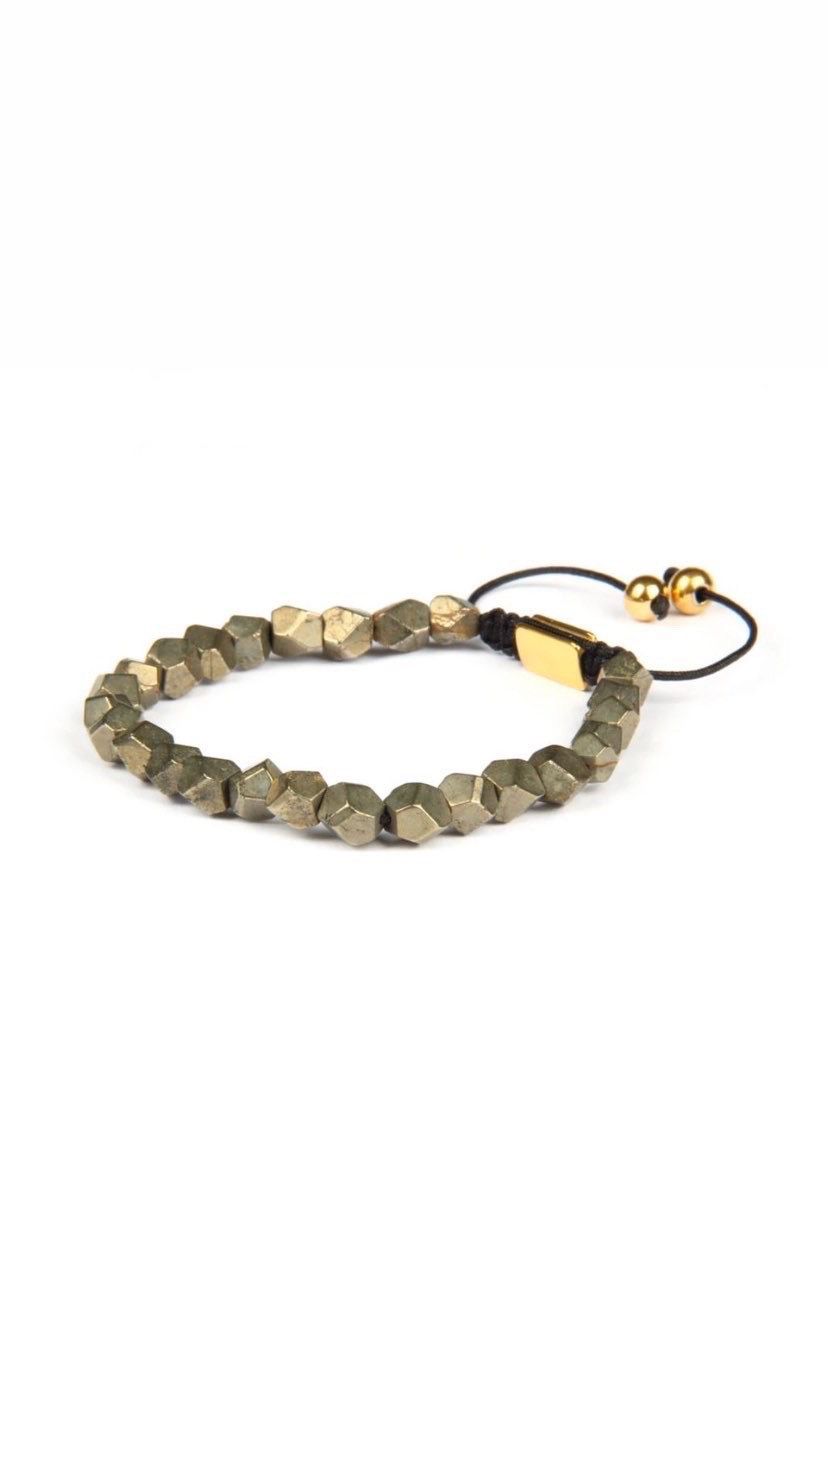 Pyrite Stone Bracelet for Prosperity - Size Adjustable